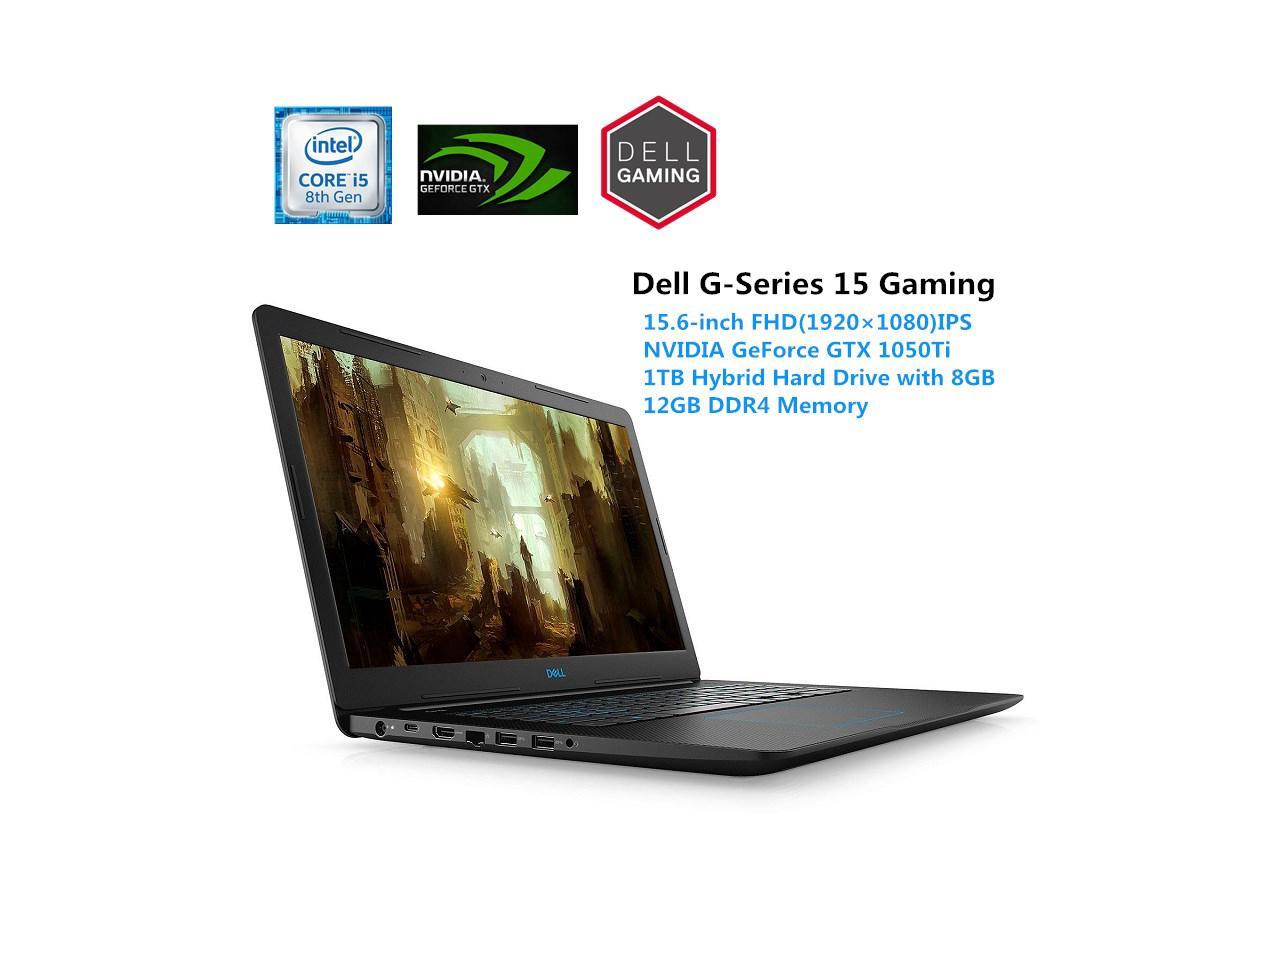 Newest Dell 15.6" FHD IPS High-Performance Gaming Laptop | Intel Core i5-8300H Quad-Core| 12GB DDR4 RAM |1TB +8GB Hybrid |NVIDIA GeForce GTX 1050Ti 4GB | Backlit Keyboard | MaxxAudio|Windows 10